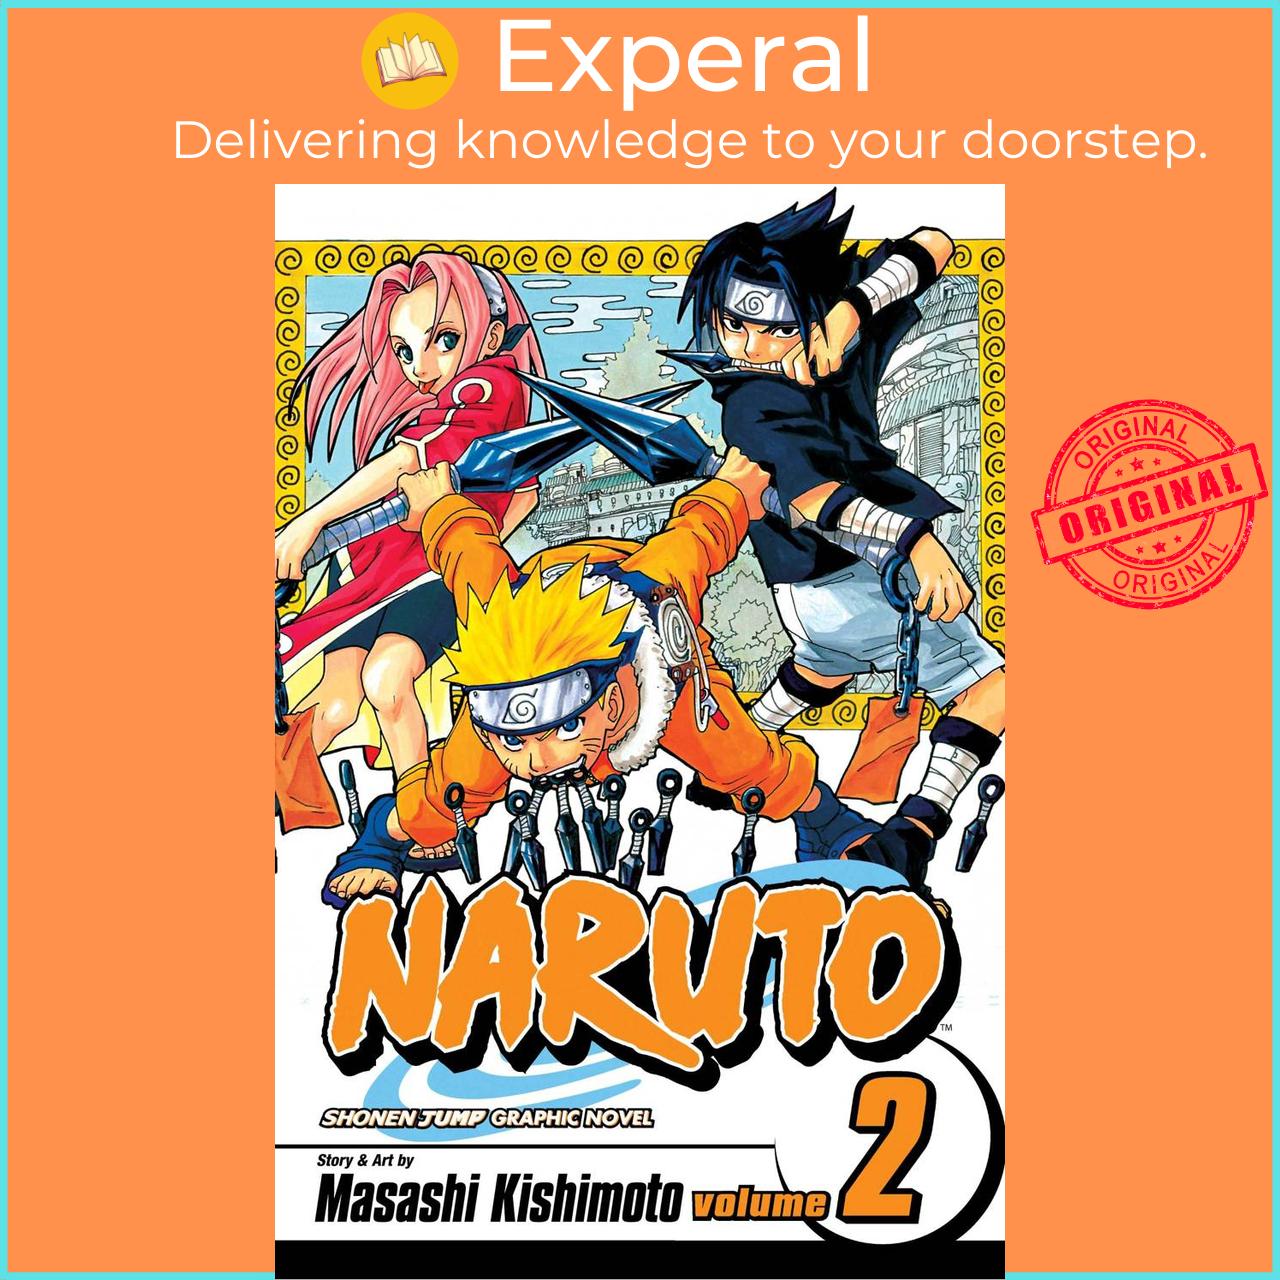 Sách - Naruto, Vol. 2 by Masashi Kishimoto (UK edition, paperback)